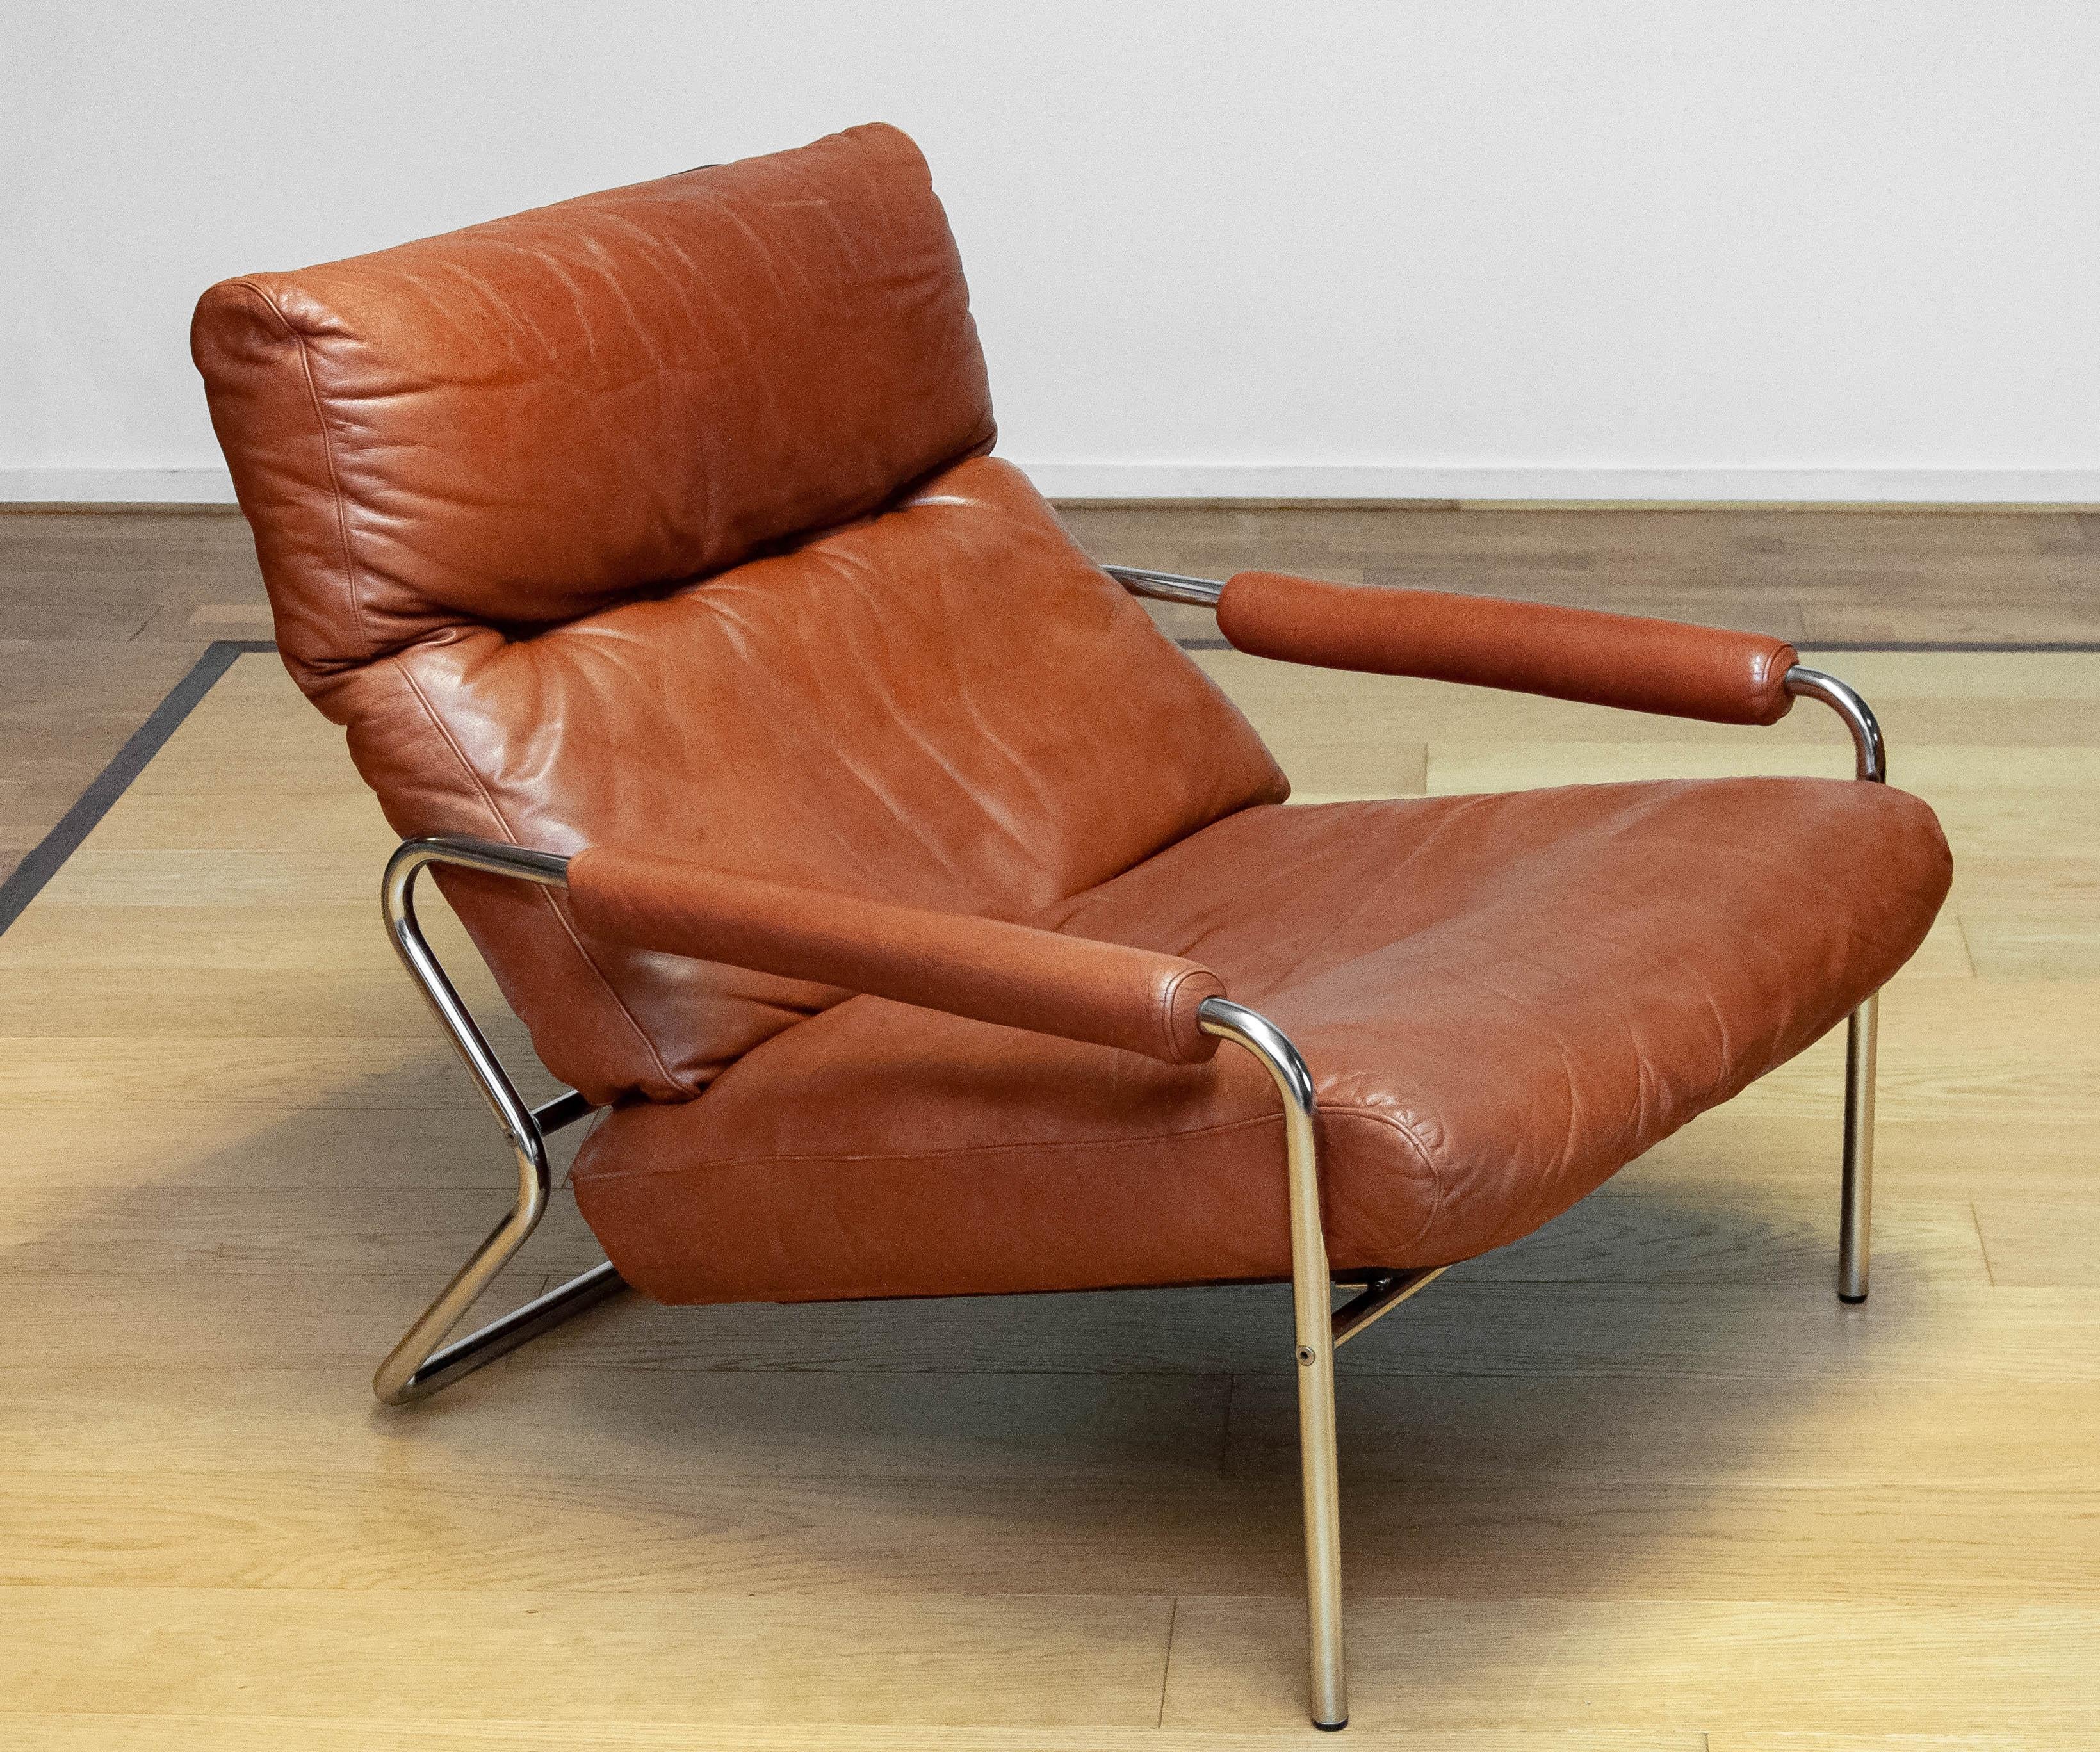 Metal 1960s Scandinavian Modern Tubular Chrome And Brown Leather Lounge Chair